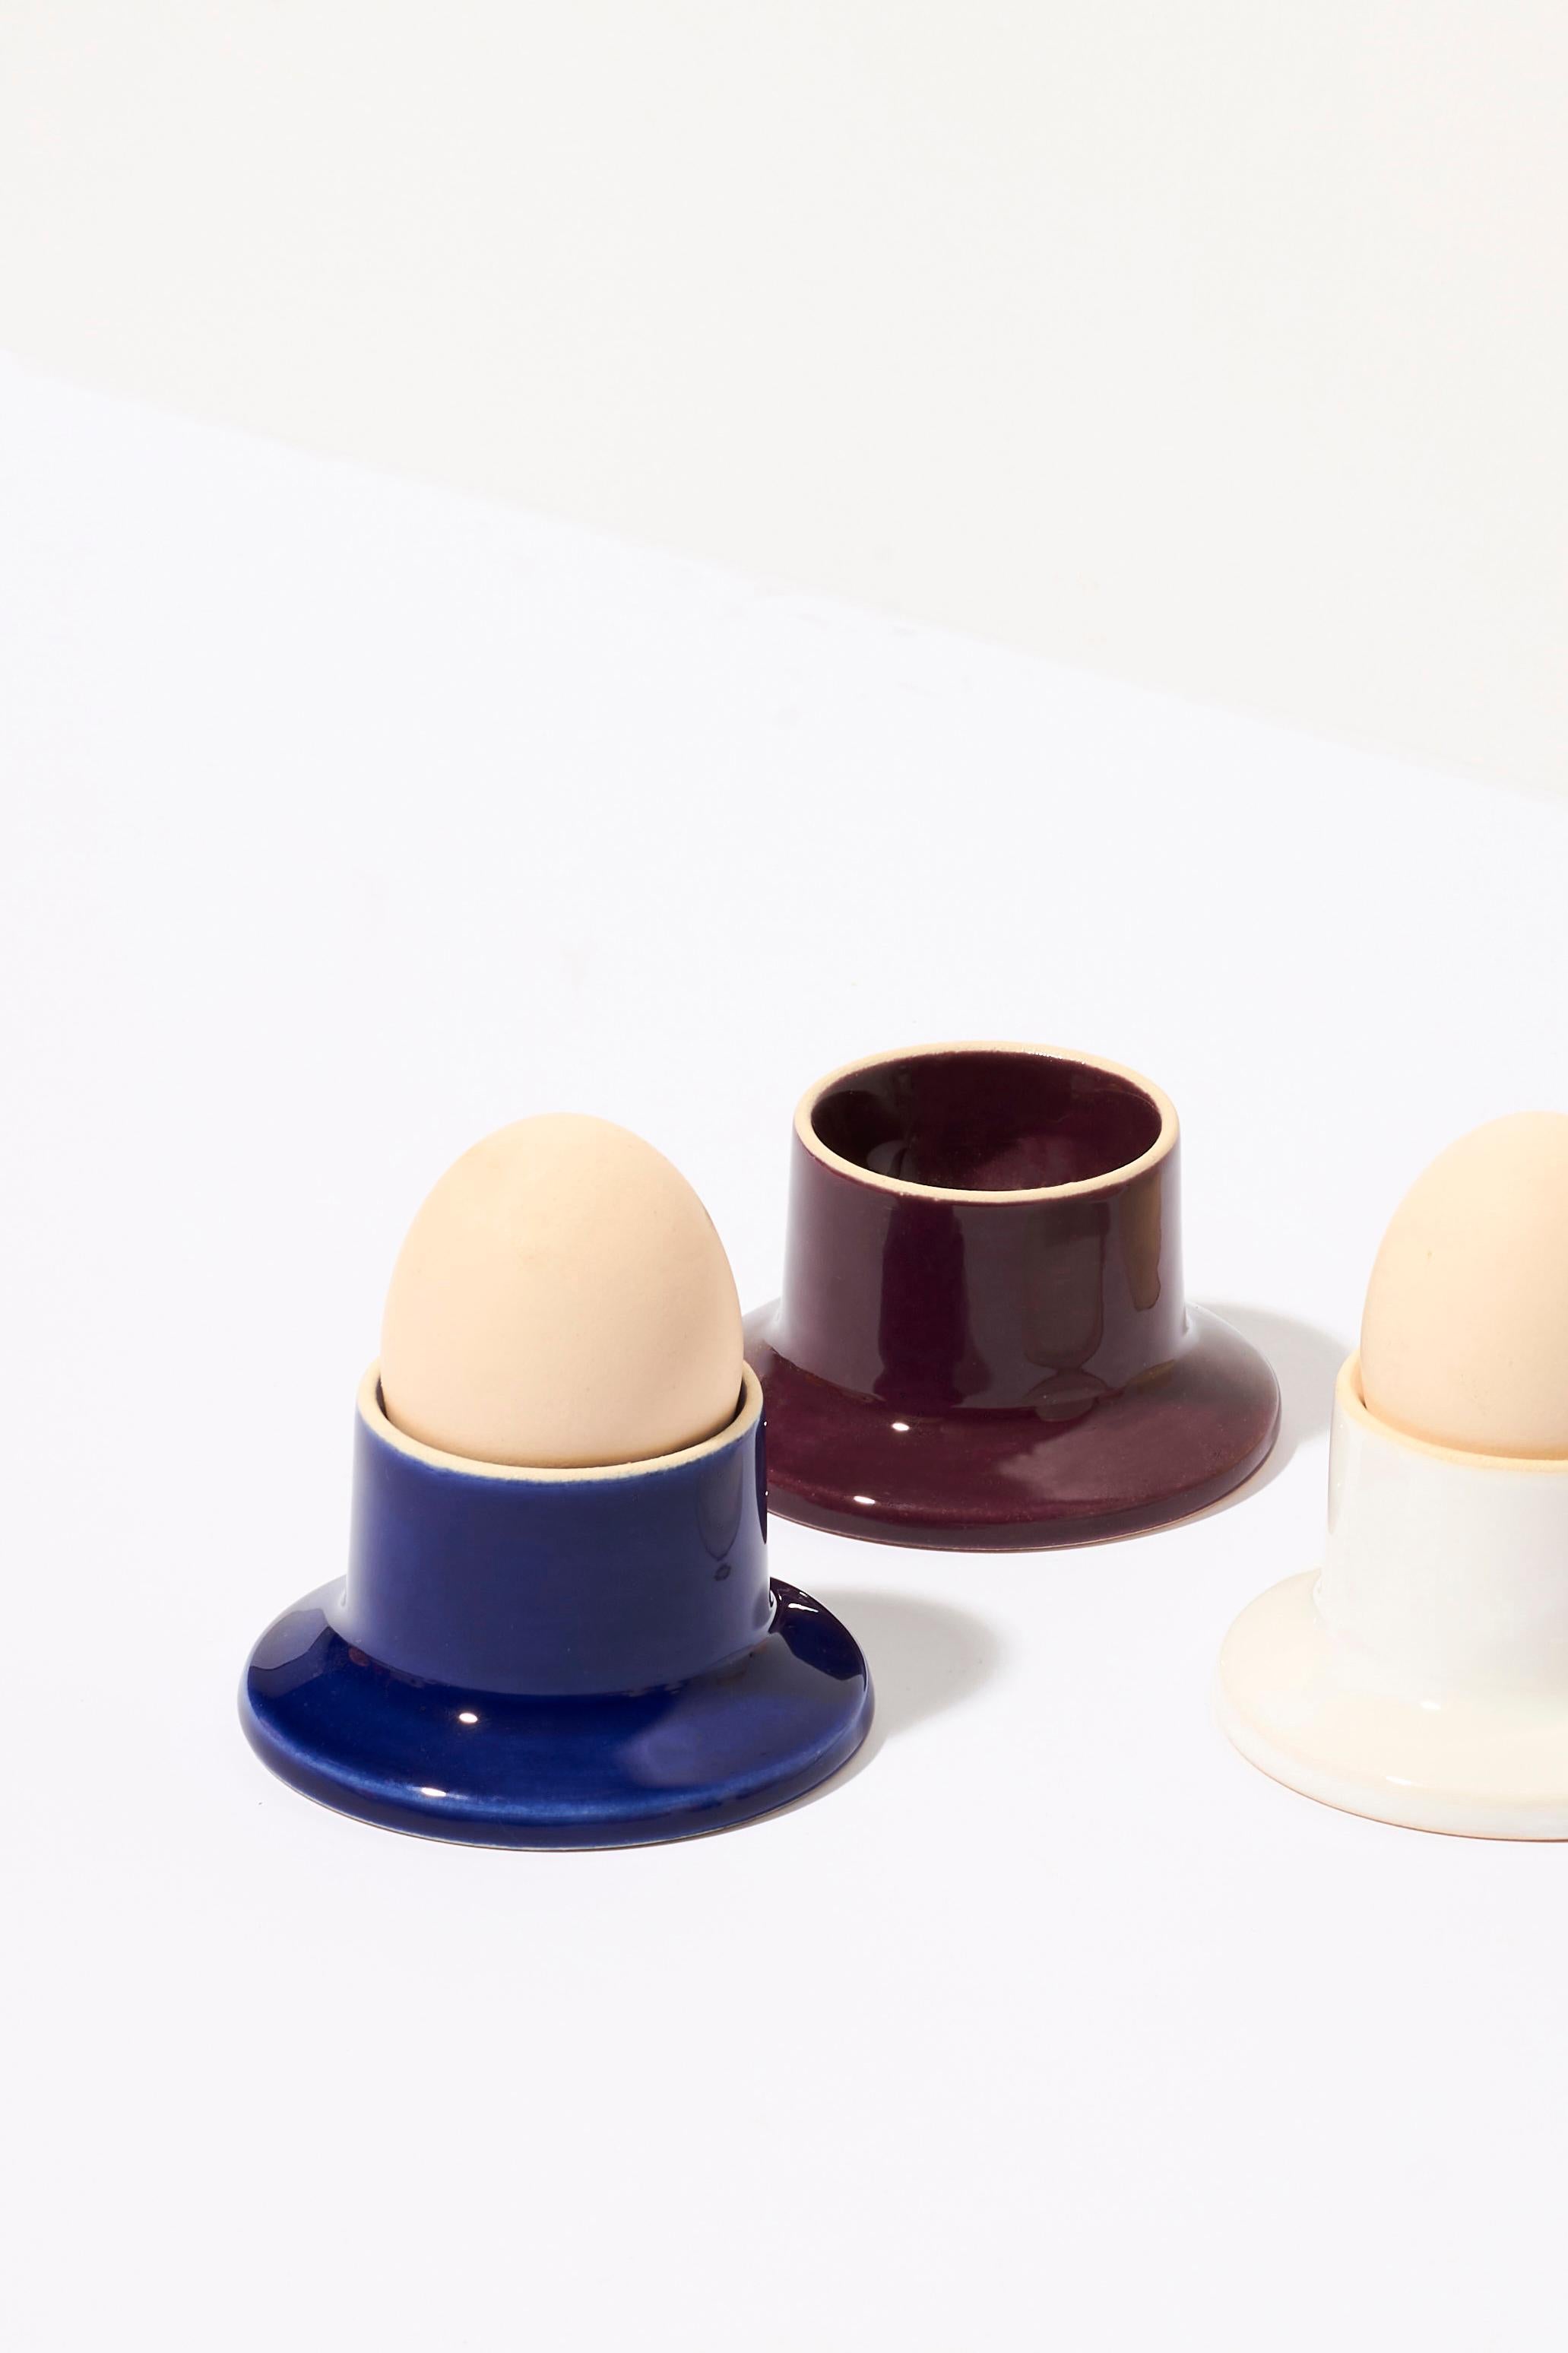 Glazed Egg holder / Plum / set of 2 by Malwina Konopacka For Sale